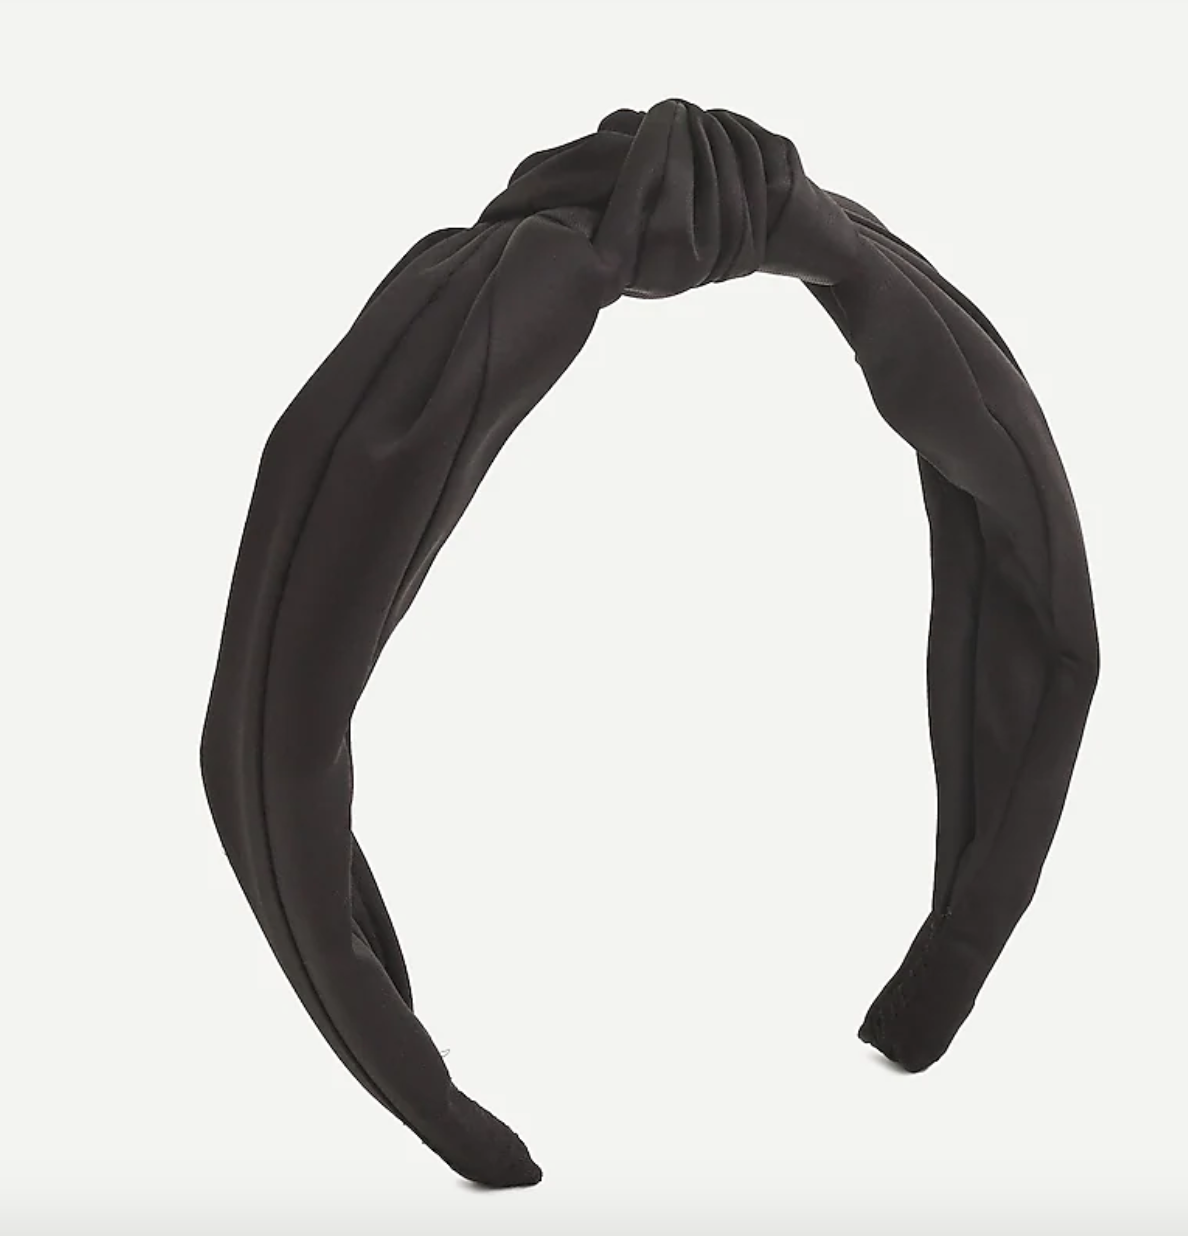 Black Knotted Headband